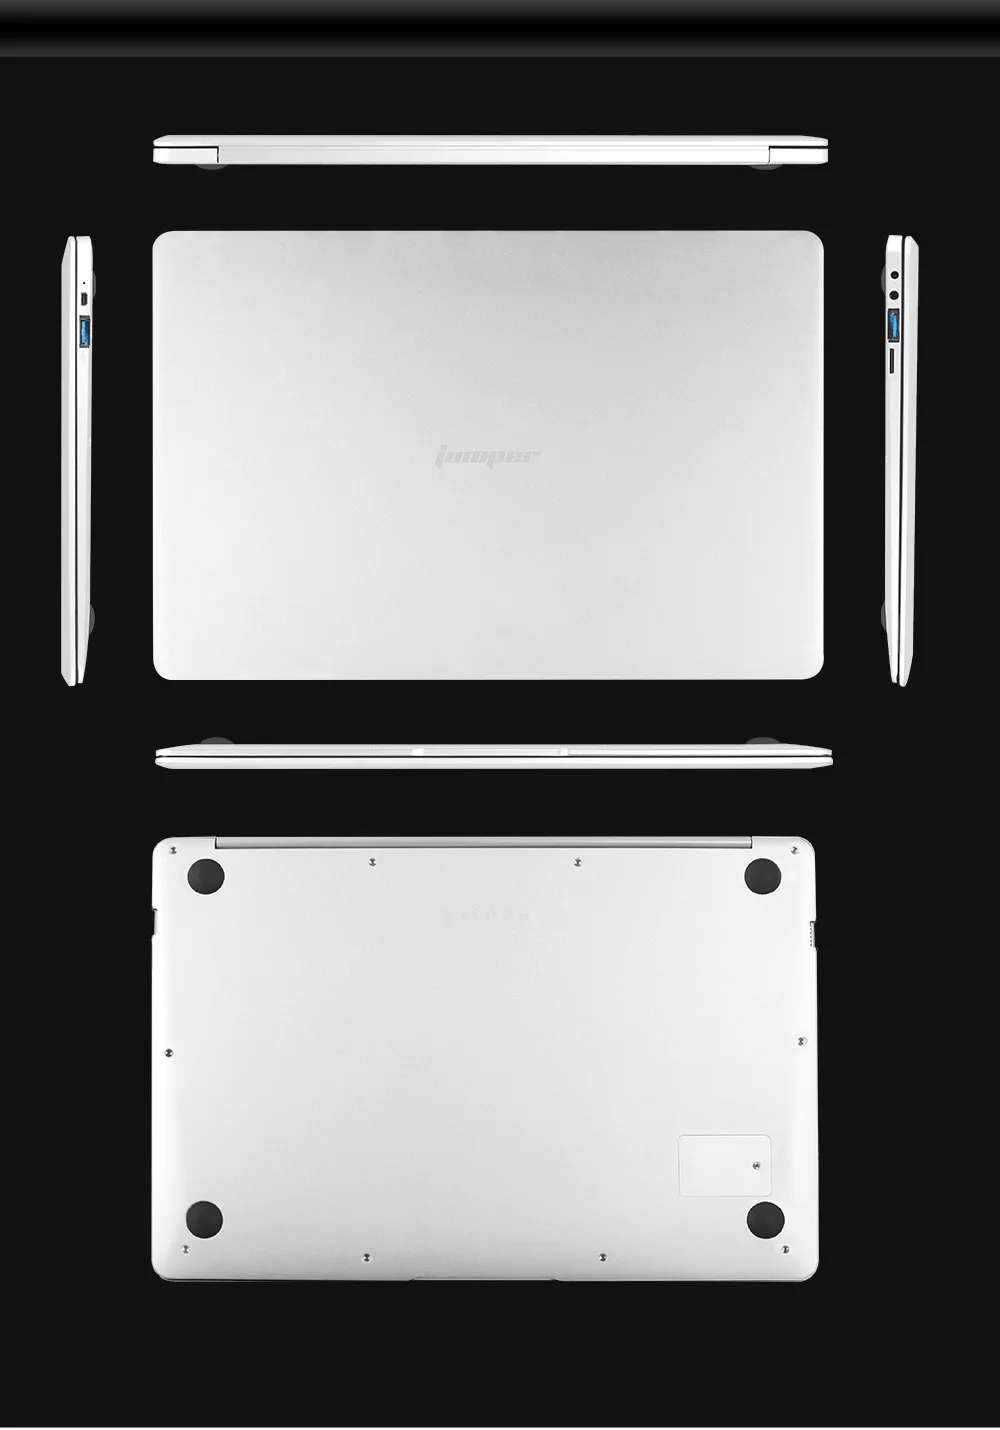 Jumper EZbook X4 ноутбук 14," FHD Windows 10 ноутбук клавиатура с подсветкой Intel Apollo Lake J3455 четырехъядерный процессор 6 ГБ+ 128 Гб SSD 2MP ПК